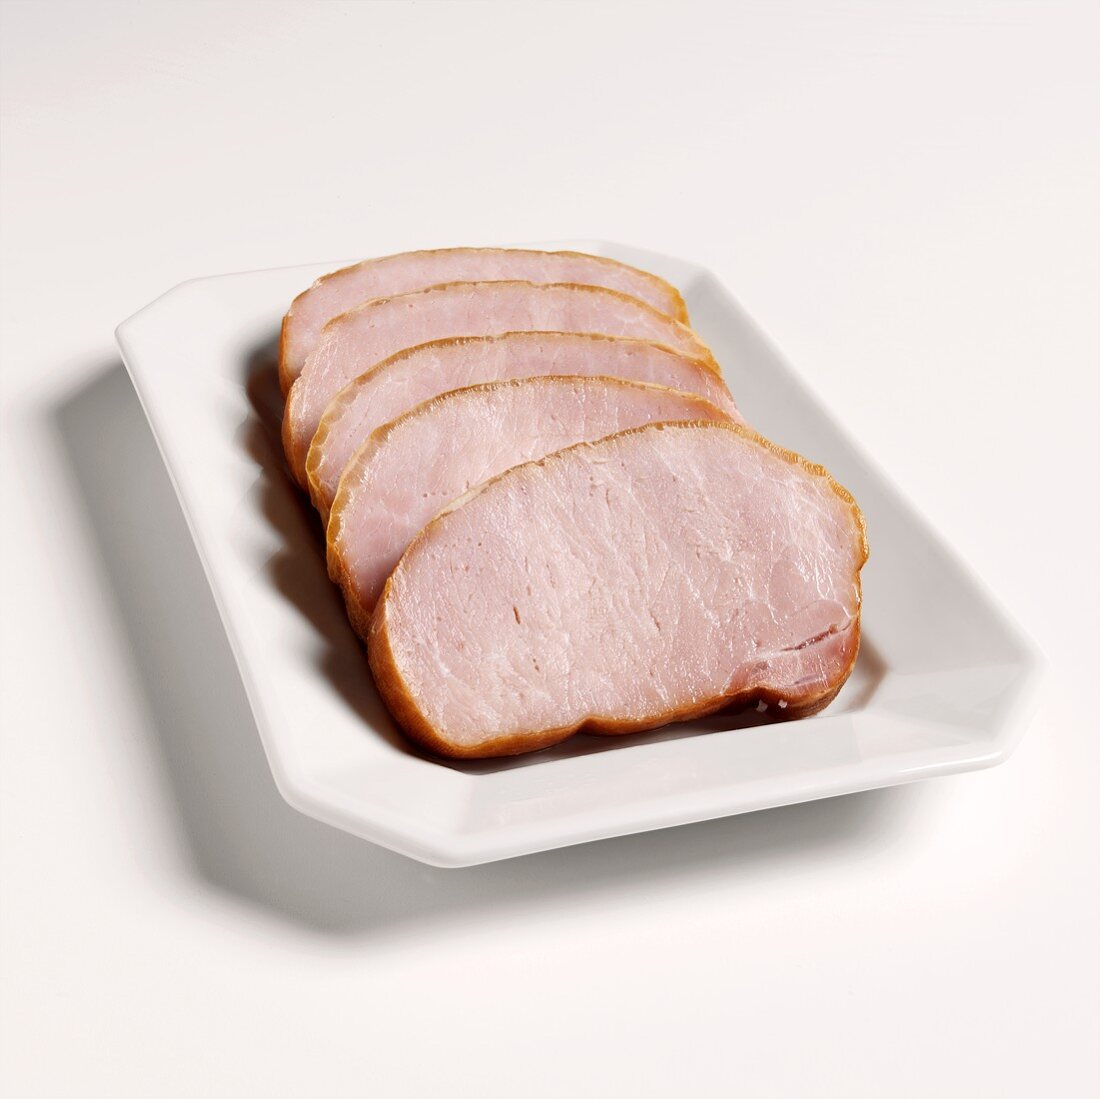 Smoked pork chops on white platter